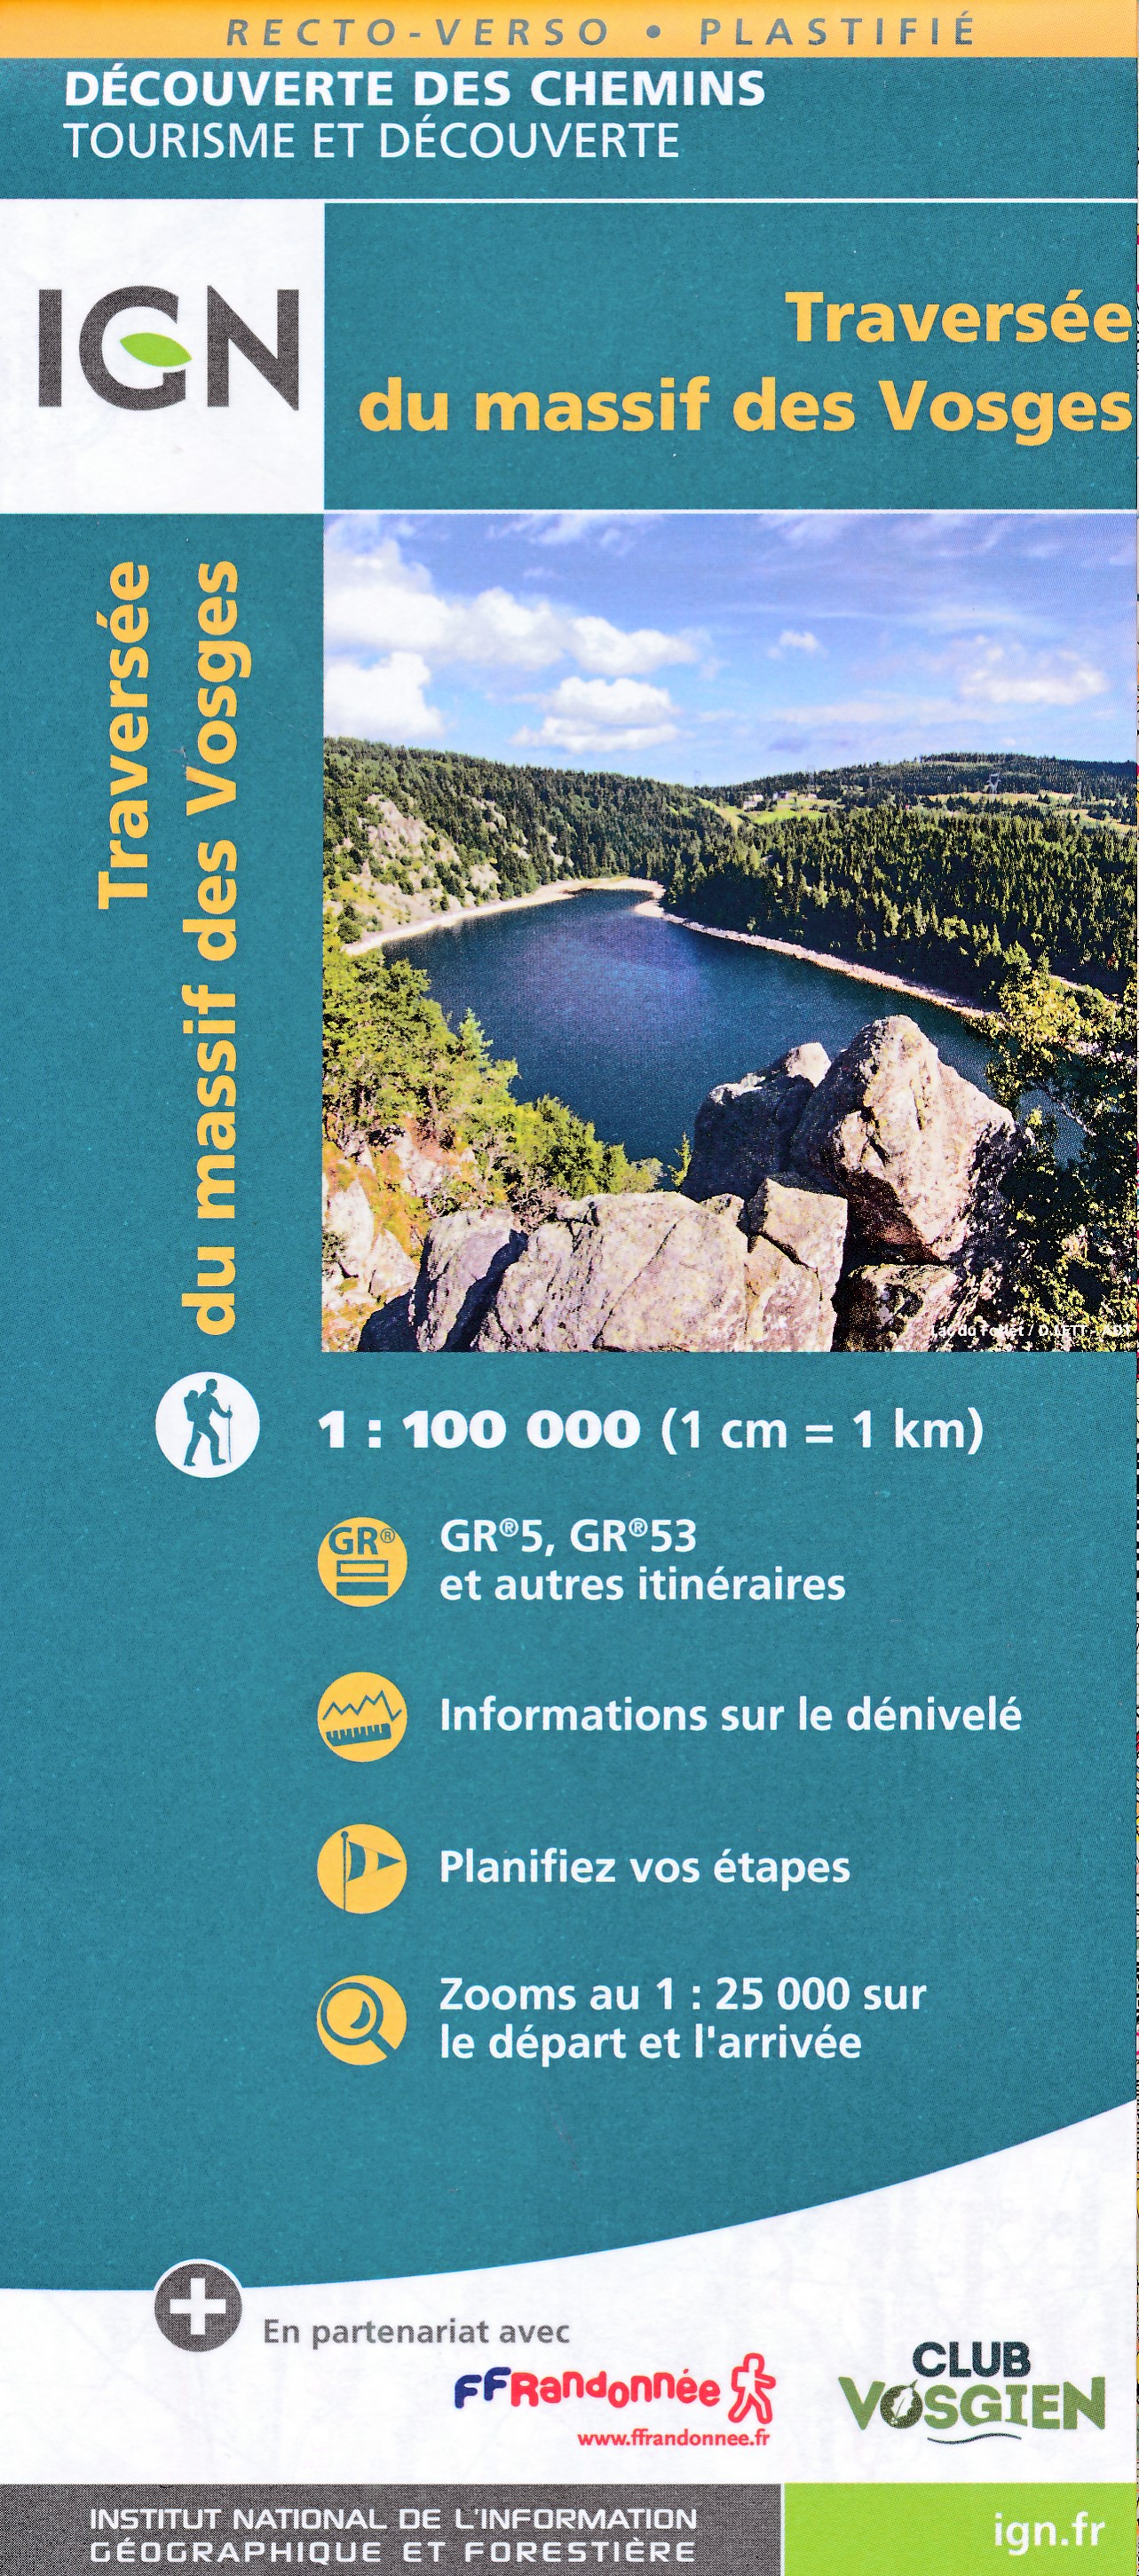 Online bestellen: Wandelkaart Traversée du Massif des Vosges GR5 - GR53 Vogezen | IGN - Institut Géographique National